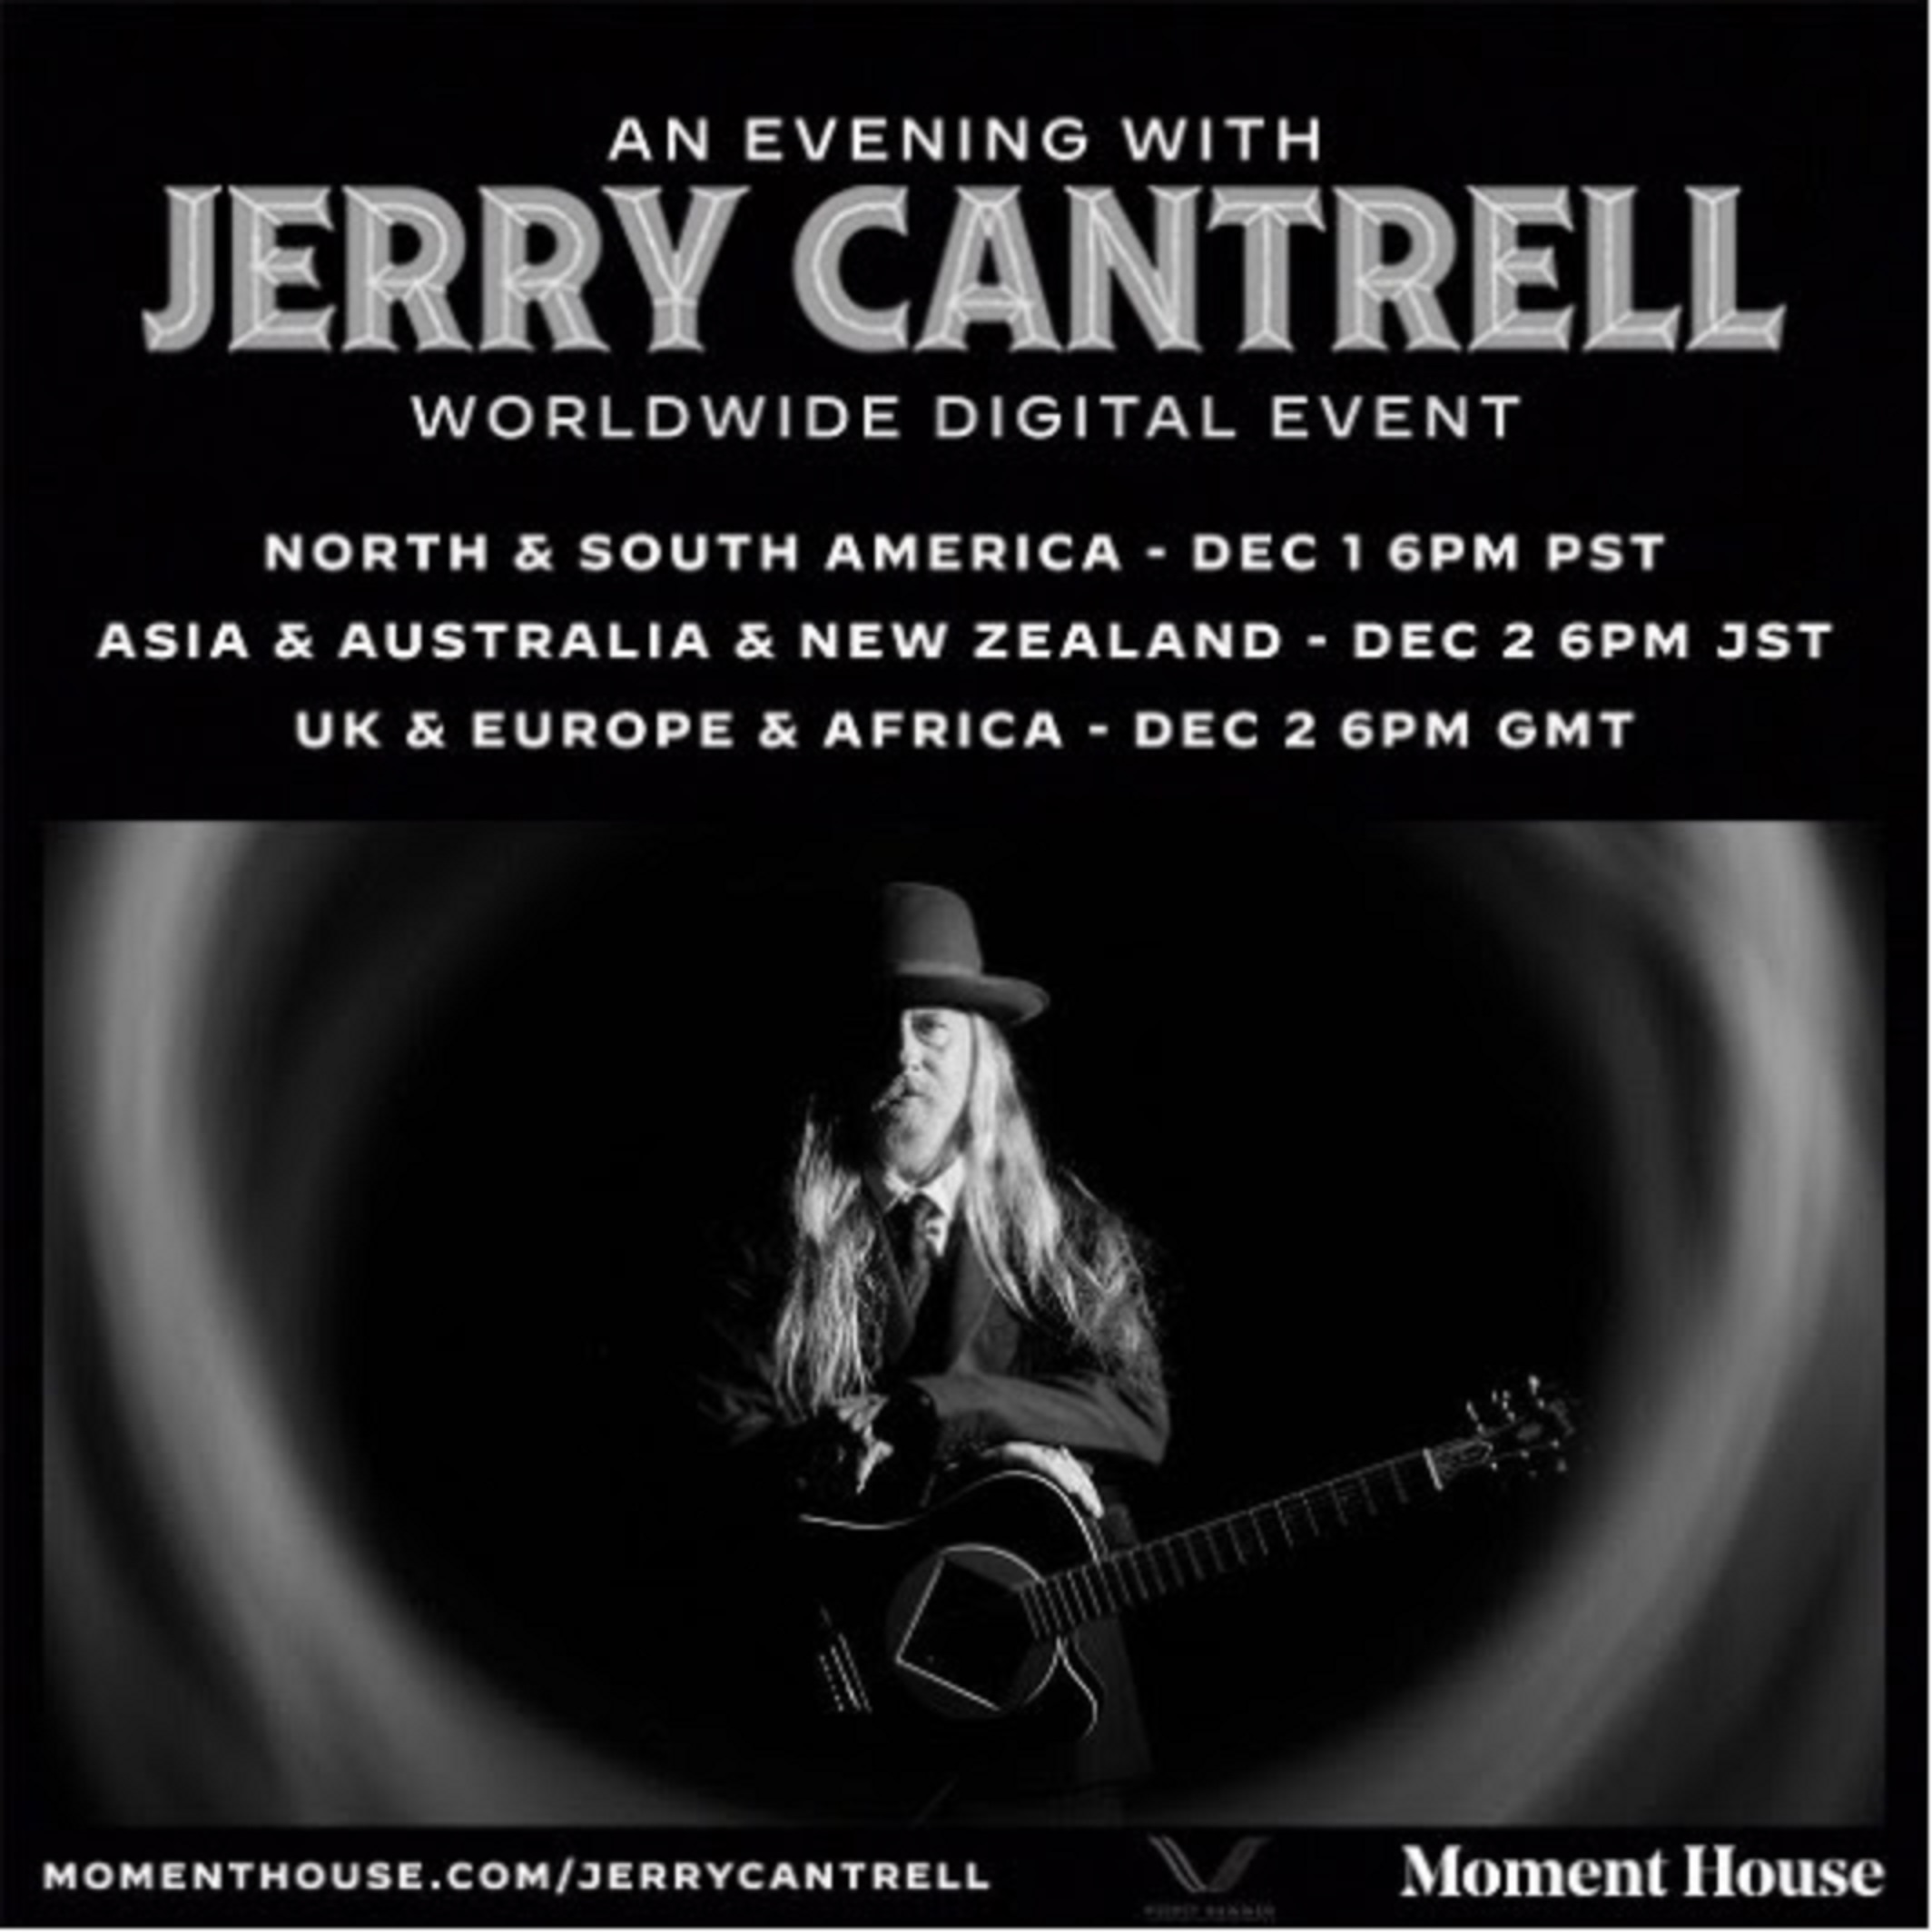 Jerry Cantrell announces global livestream event